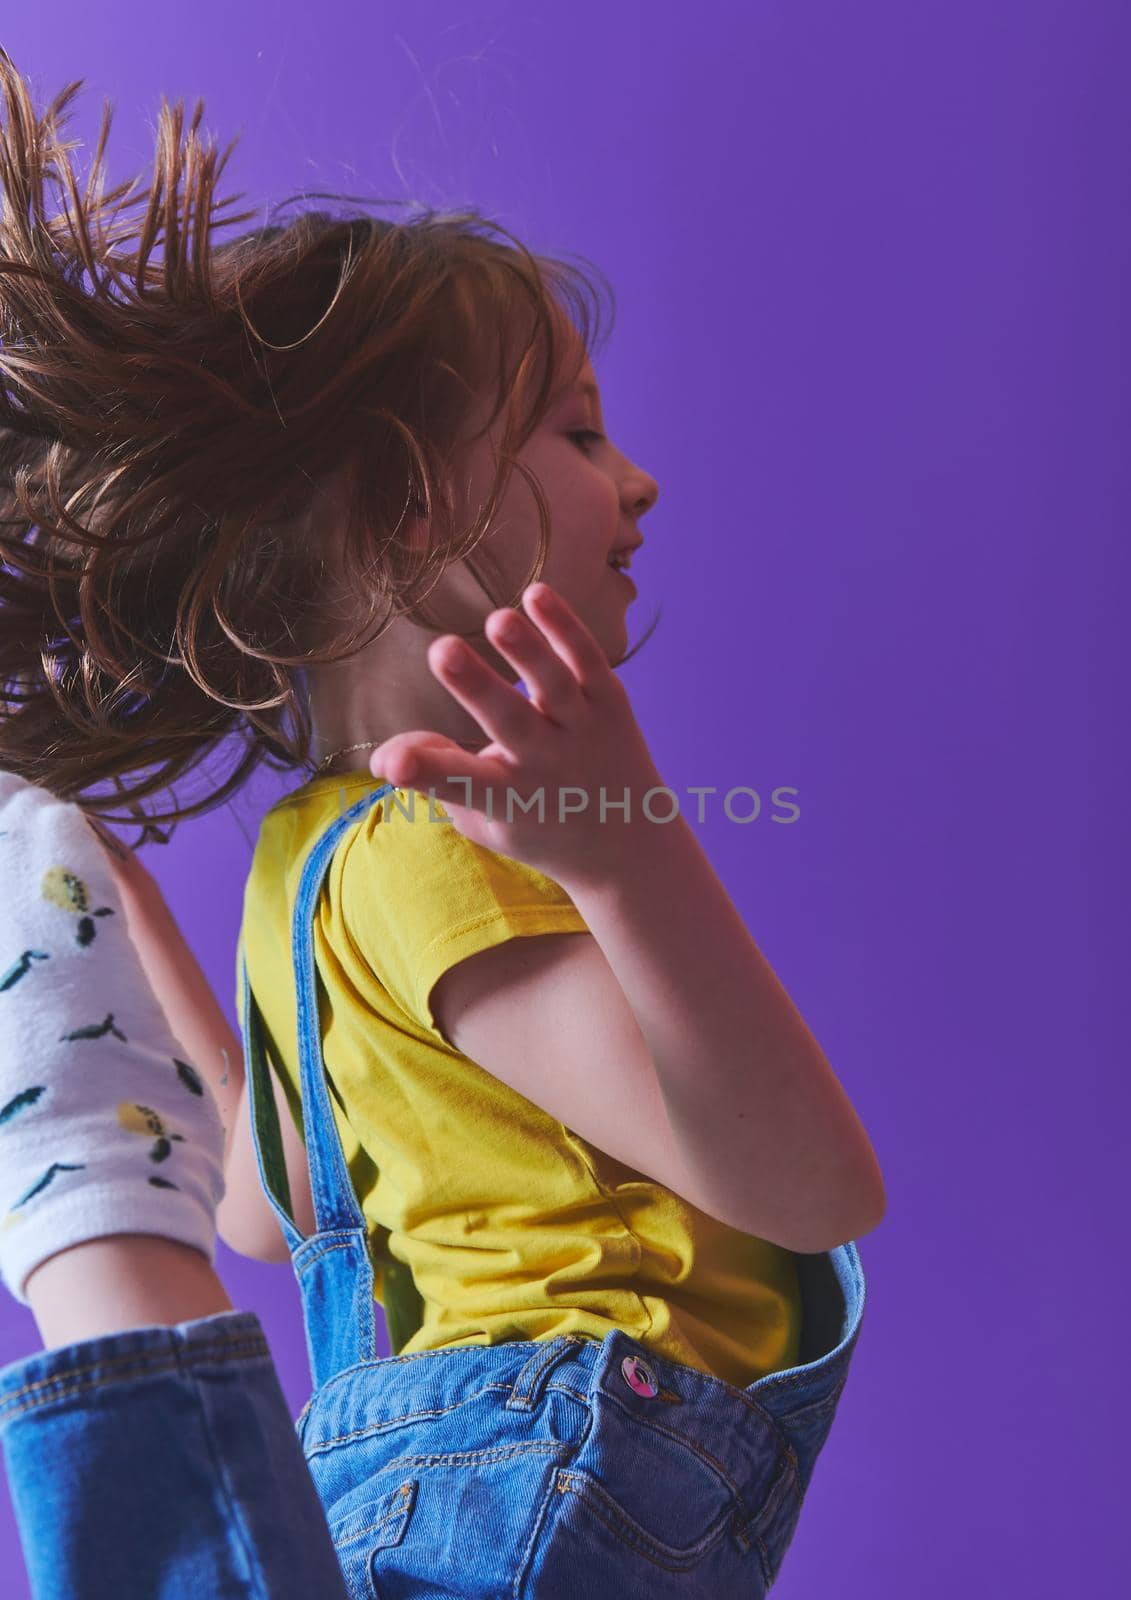 ]Cute little girl dancing at home by dotshock